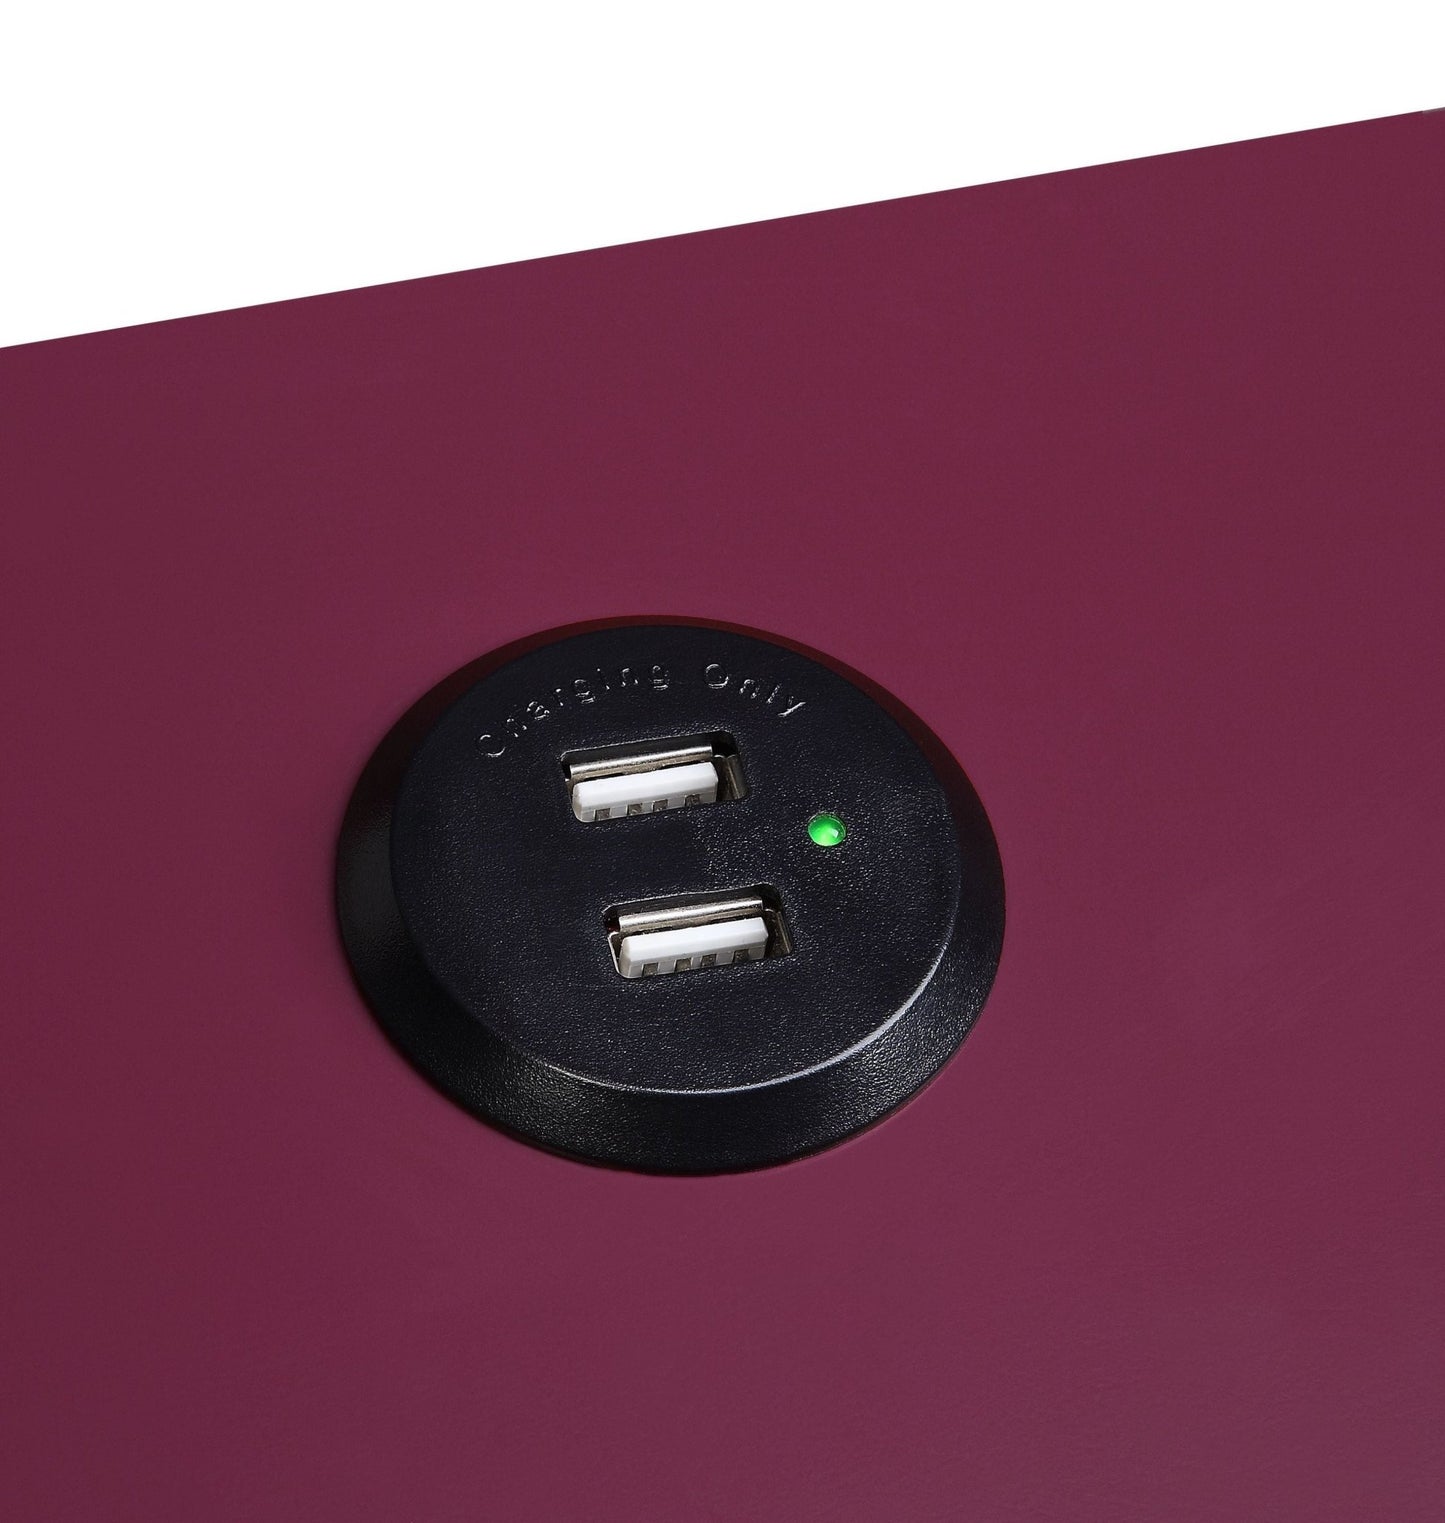 ACME Fierce Side Table (USB Charging Dock), Burgundy & Black 97737 - Groovy Boardz